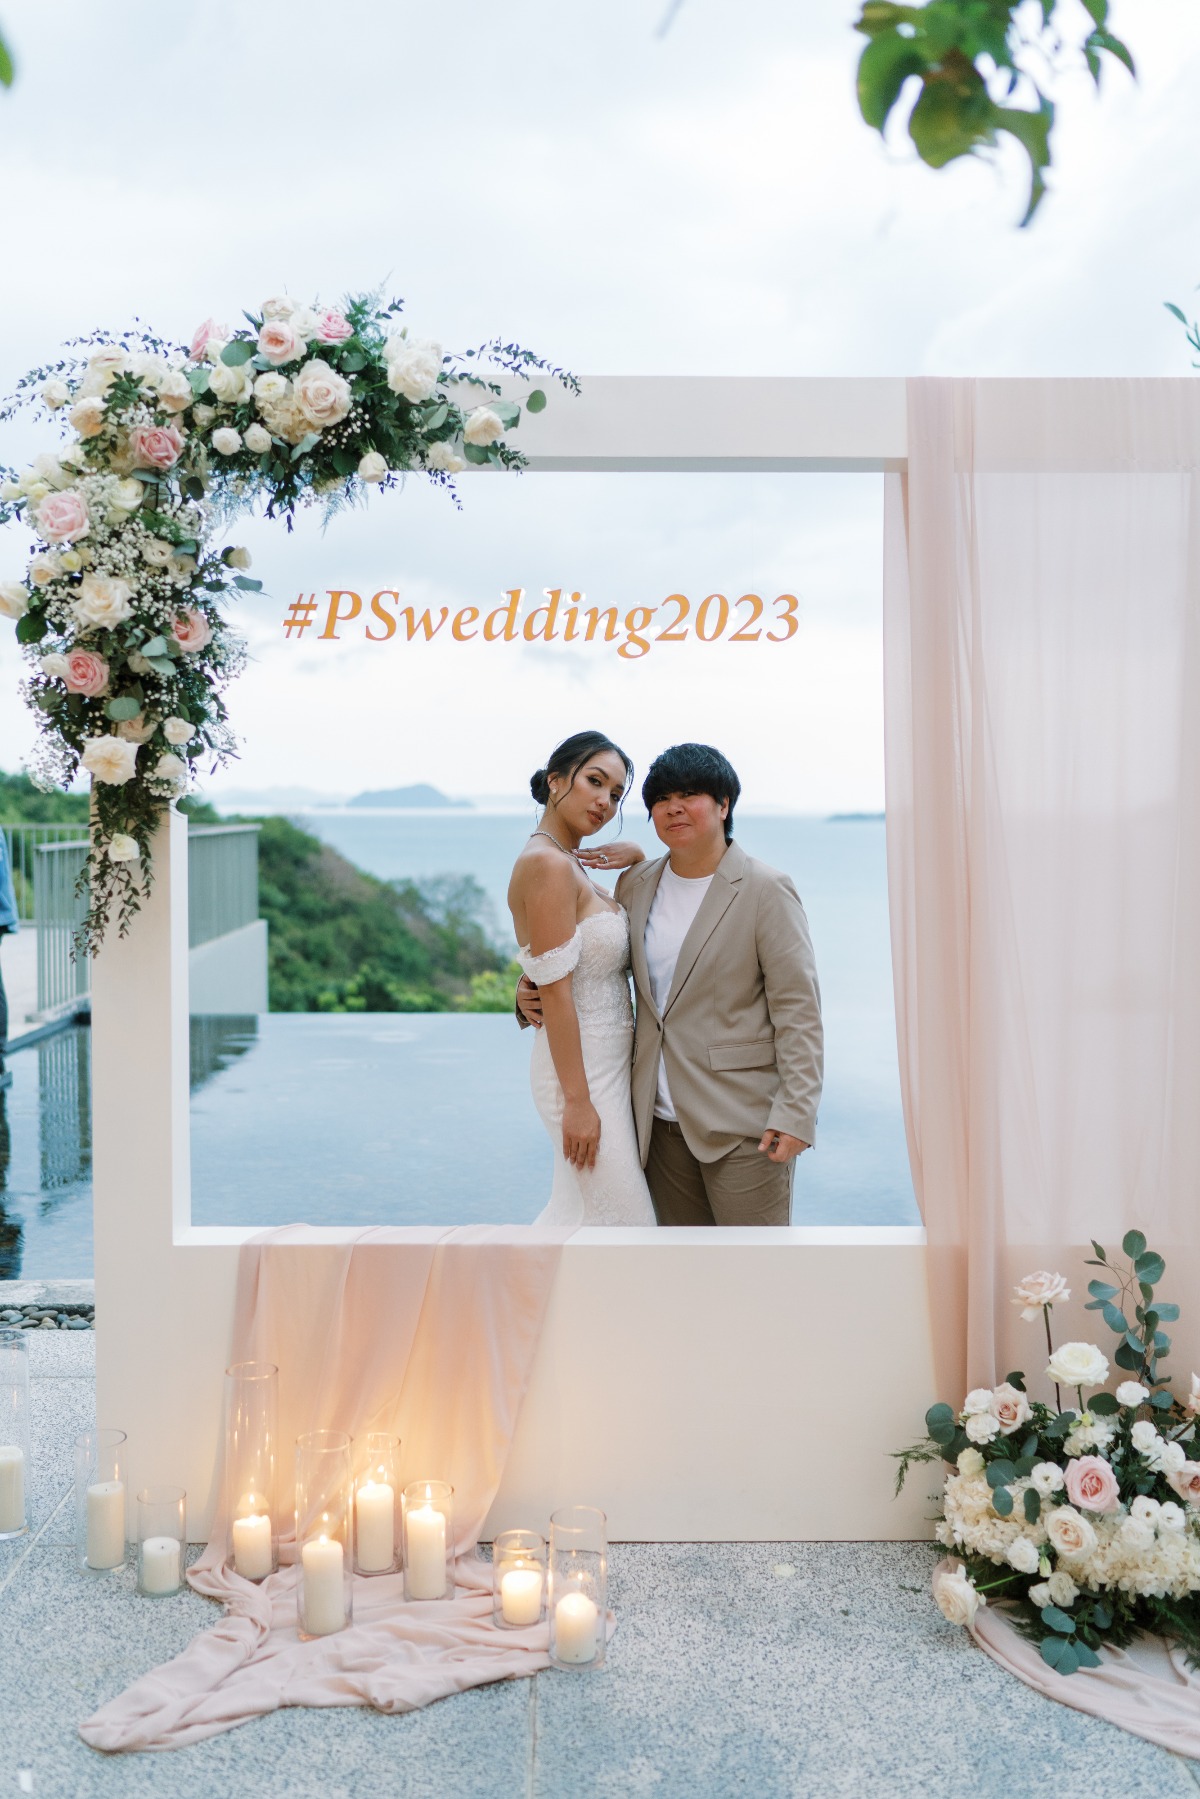 Polaroid photo backdrop for weddings 